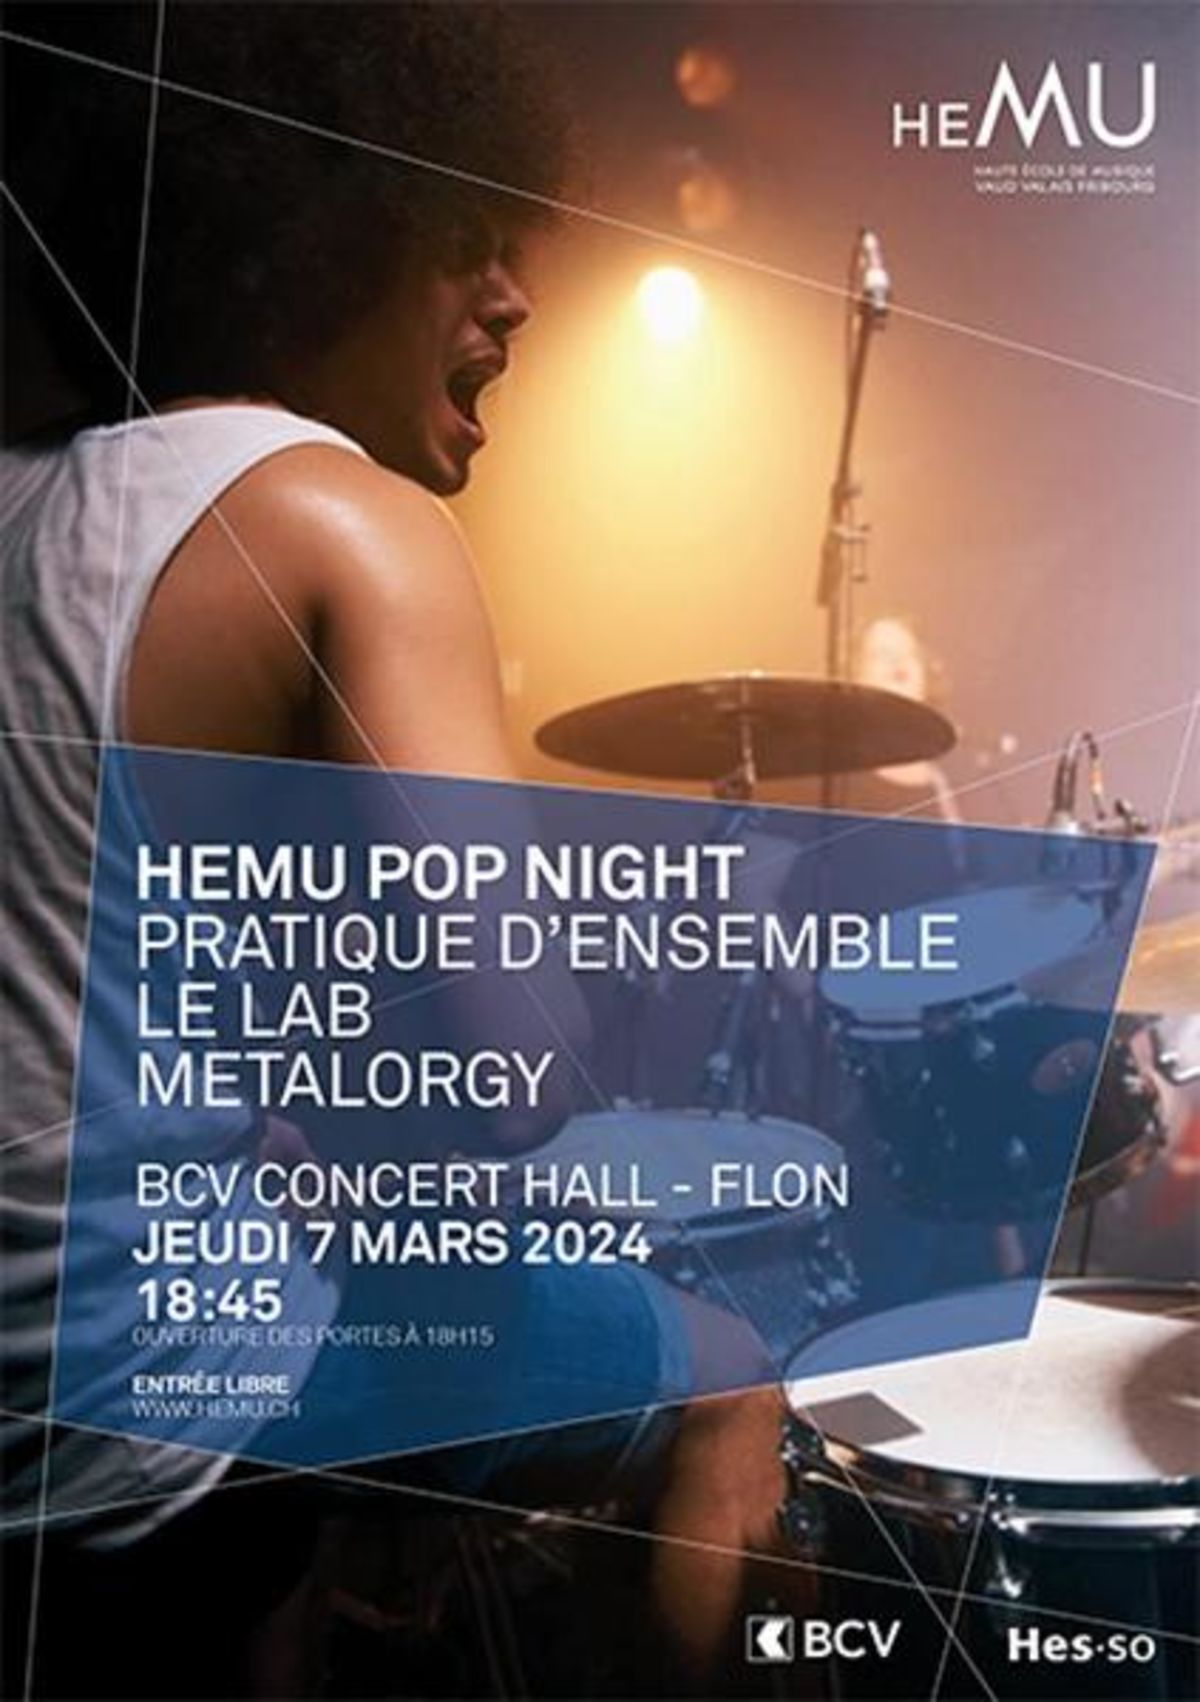 HEMU pop night - Pratique d’ensemble, le LAB, Metalorgy